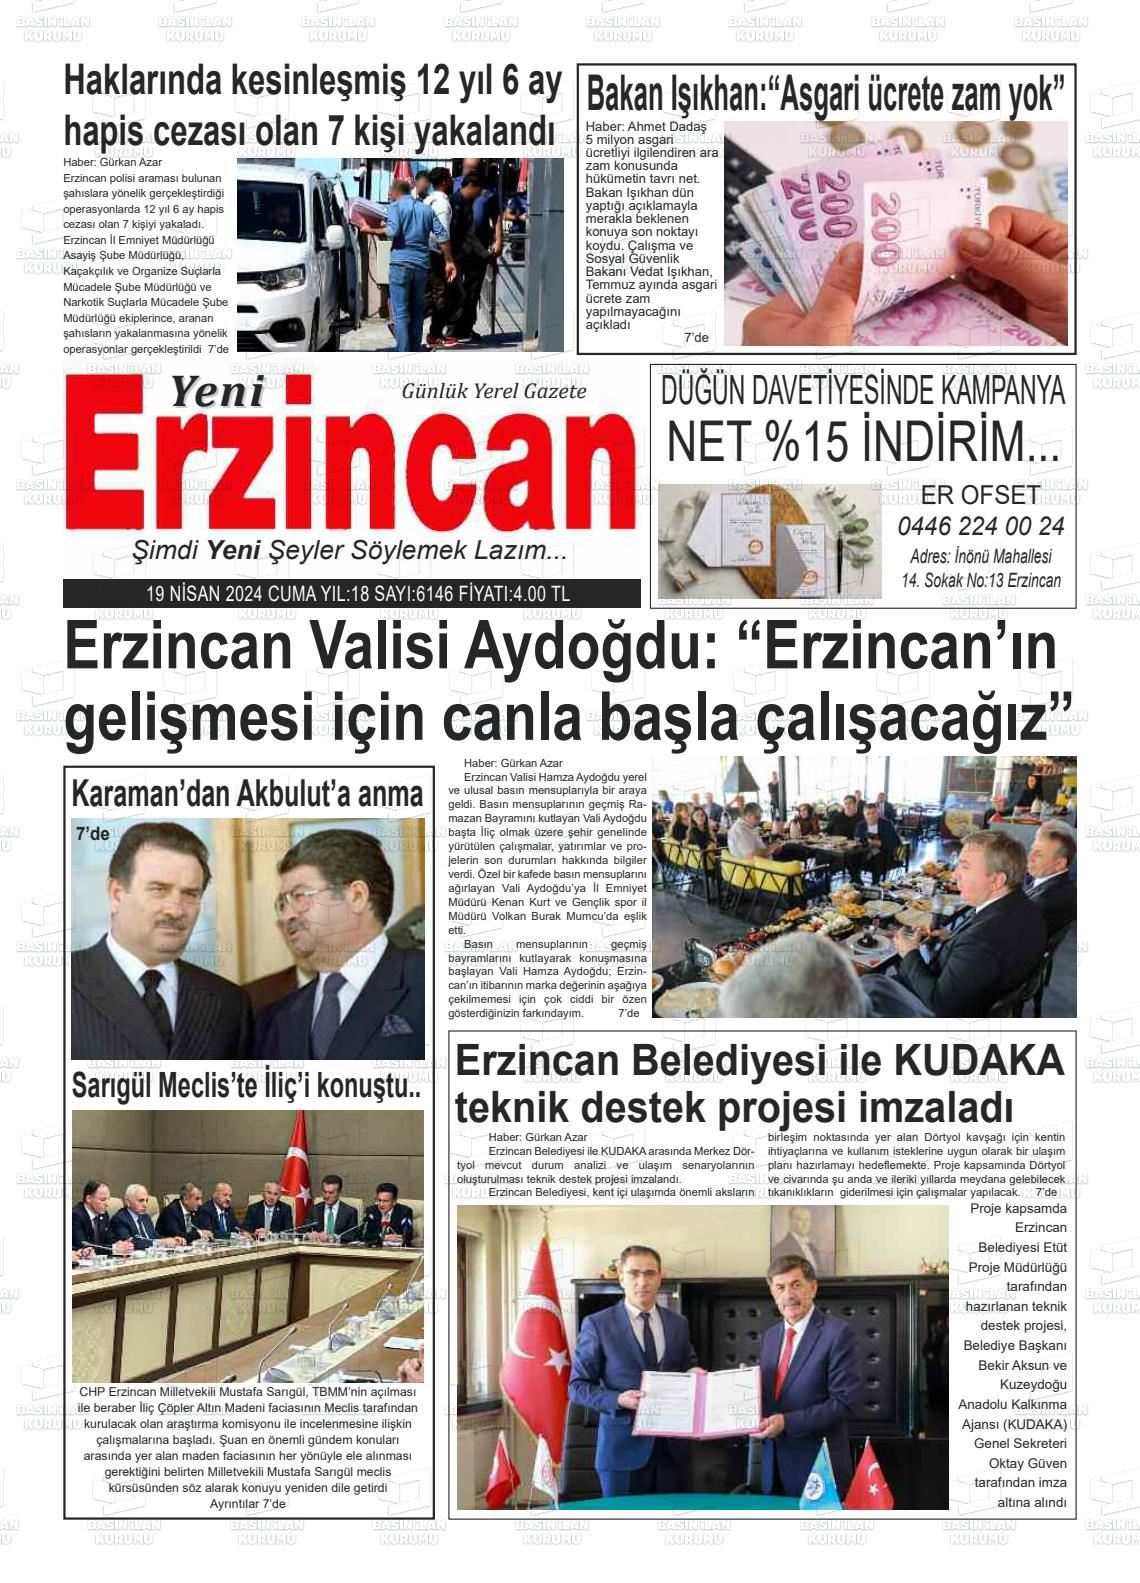 19 Nisan 2024 Yeni Erzincan Gazete Manşeti